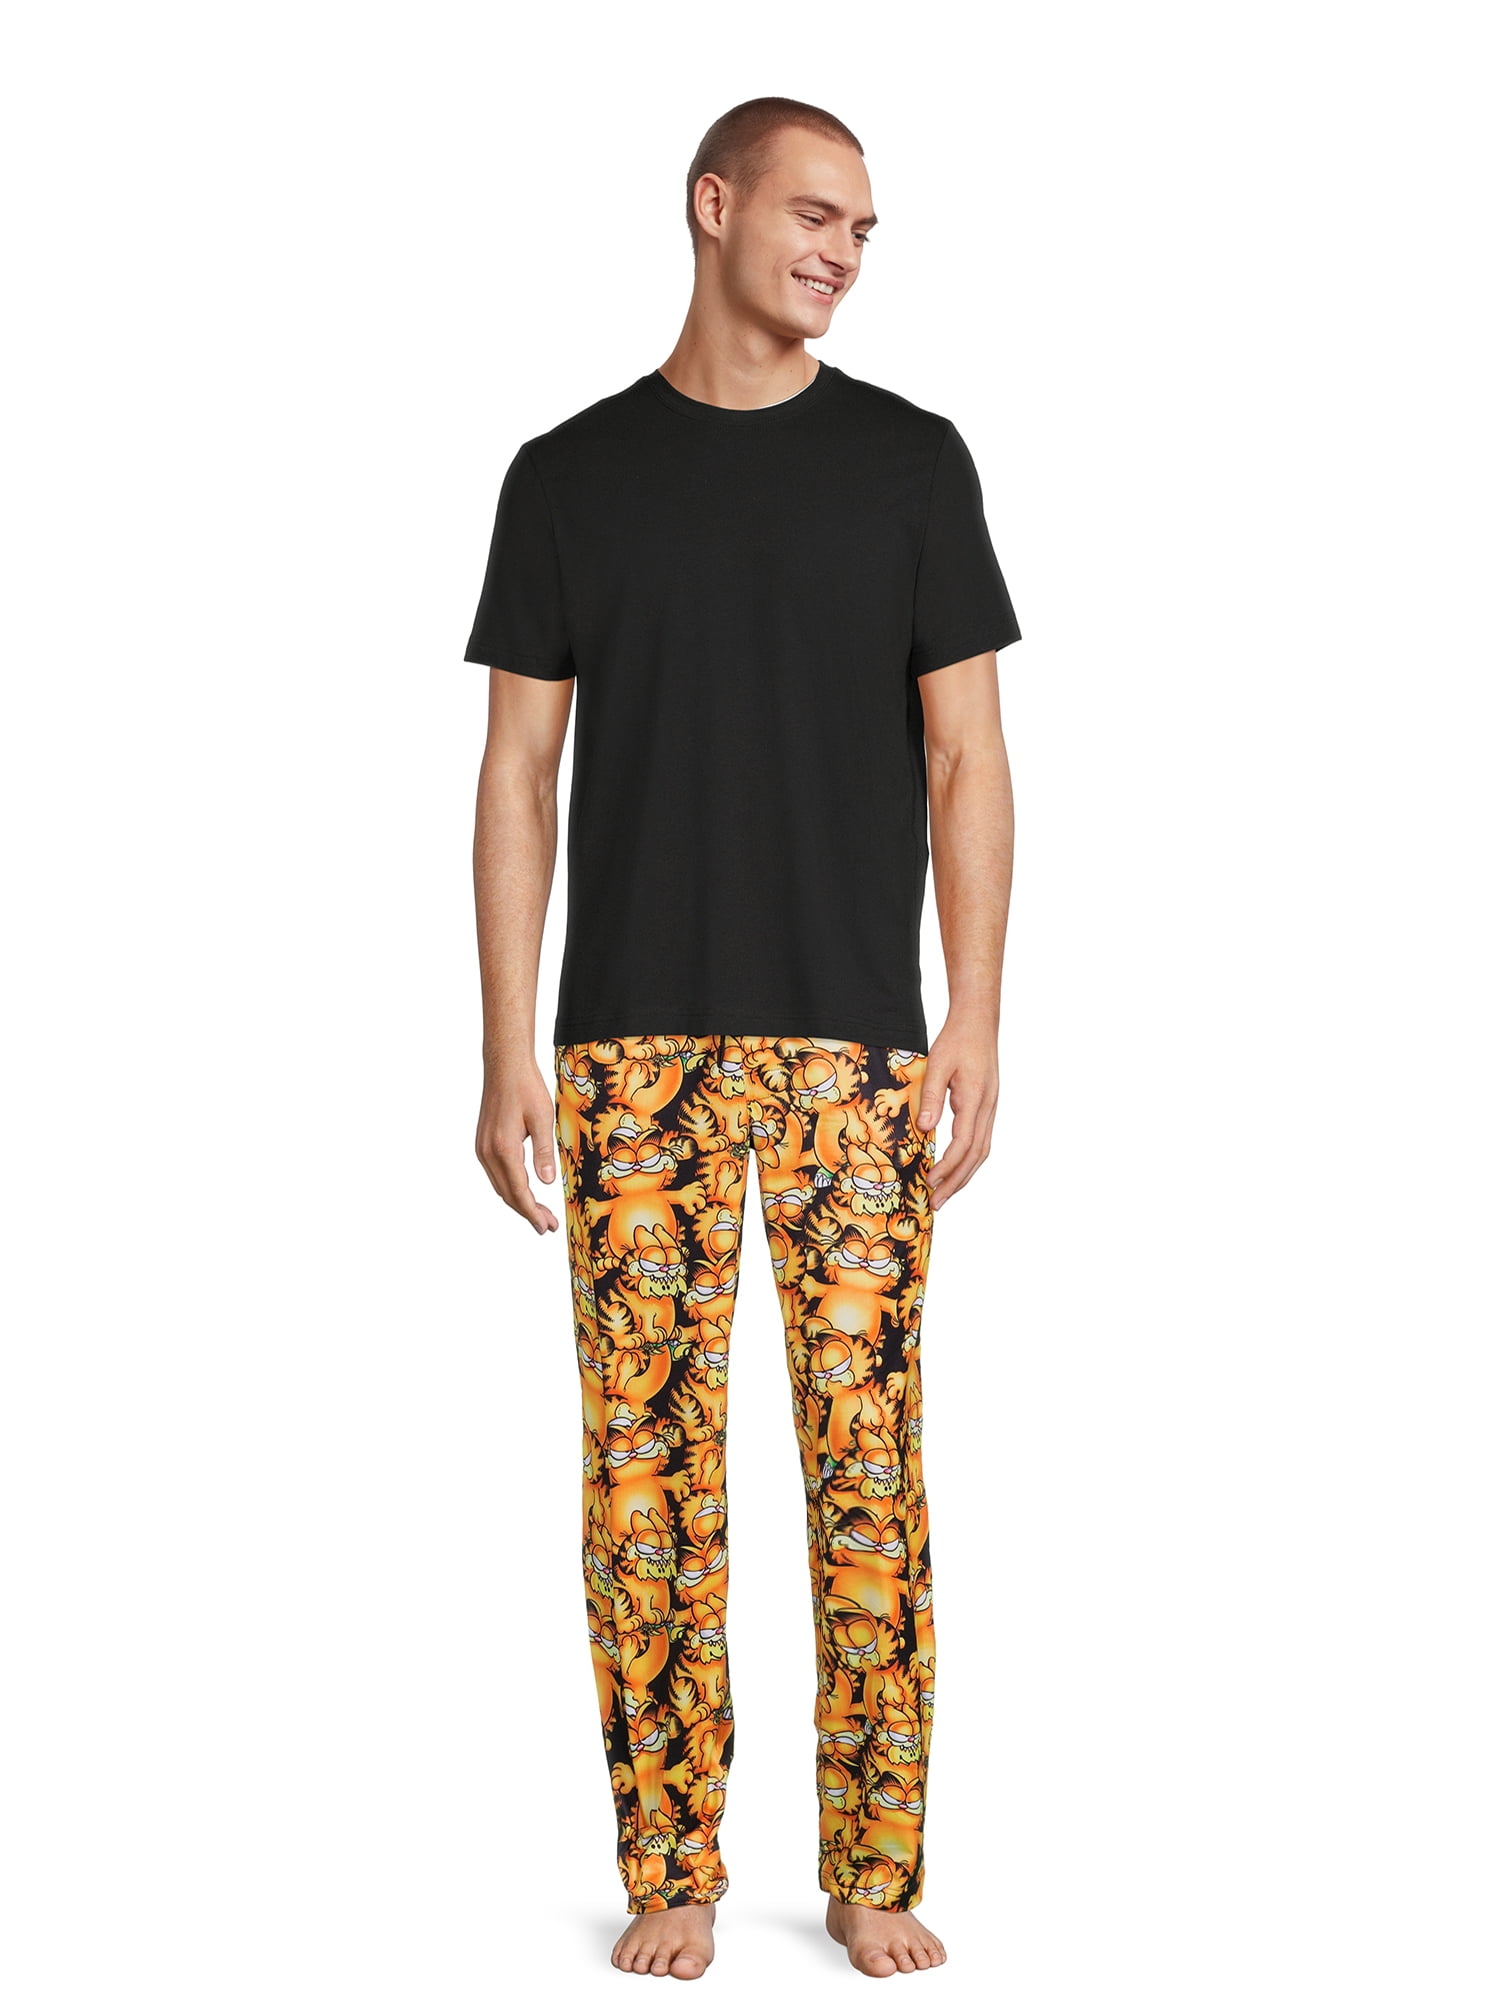 Garfield Men's Graphic Print Sleep Pants, Sizes S-2XL